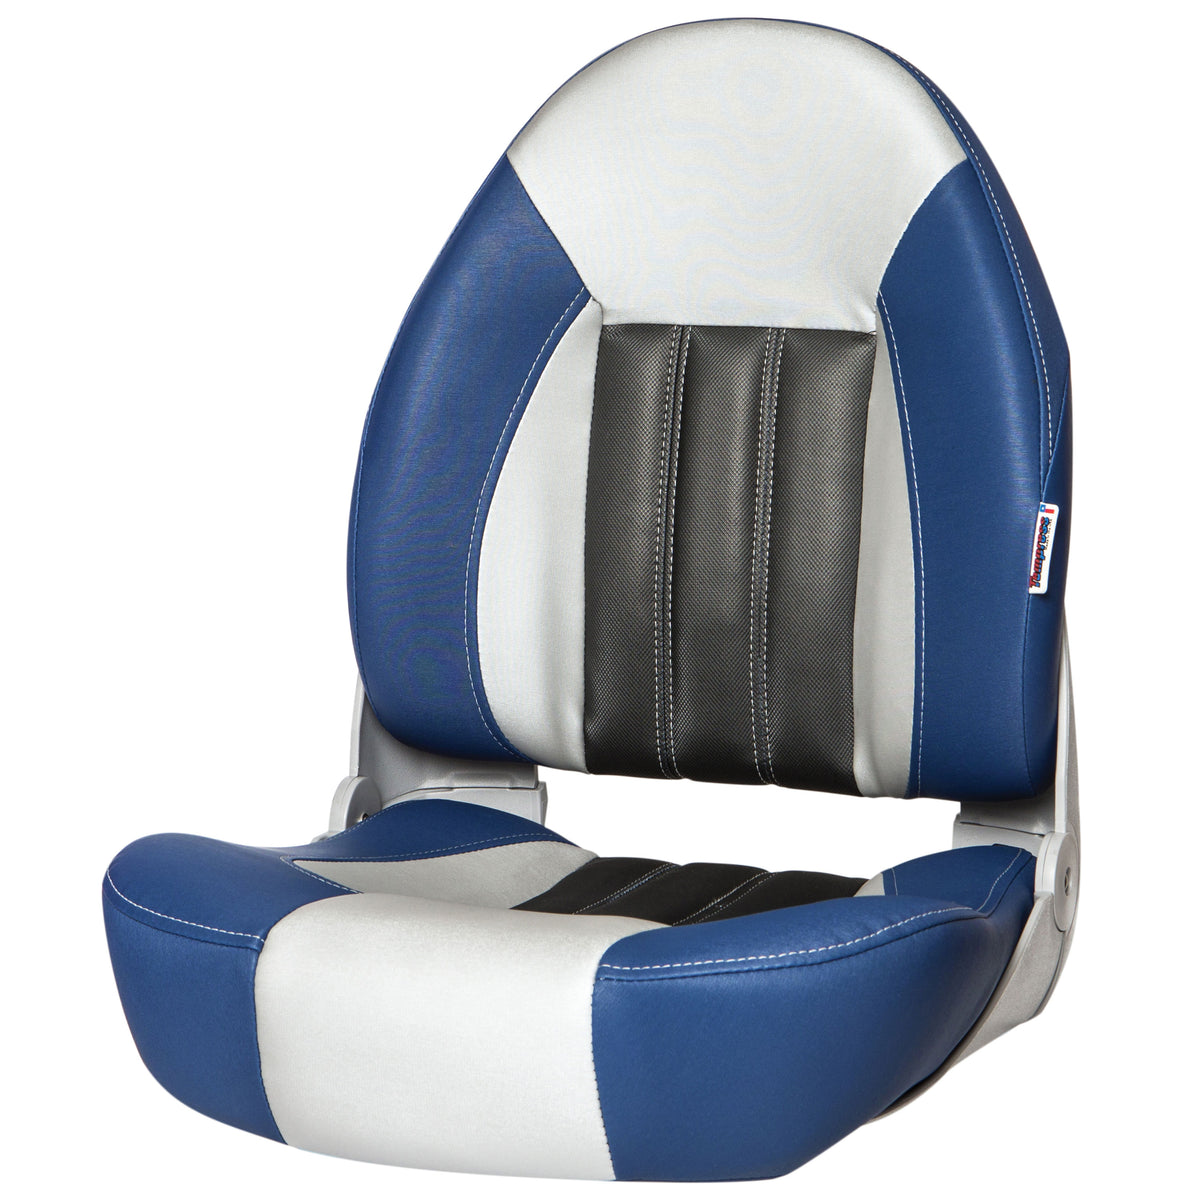 Tempress 68451 Probax High-Back Orthopedic Boat Seat - Blue/Gray/Carbon